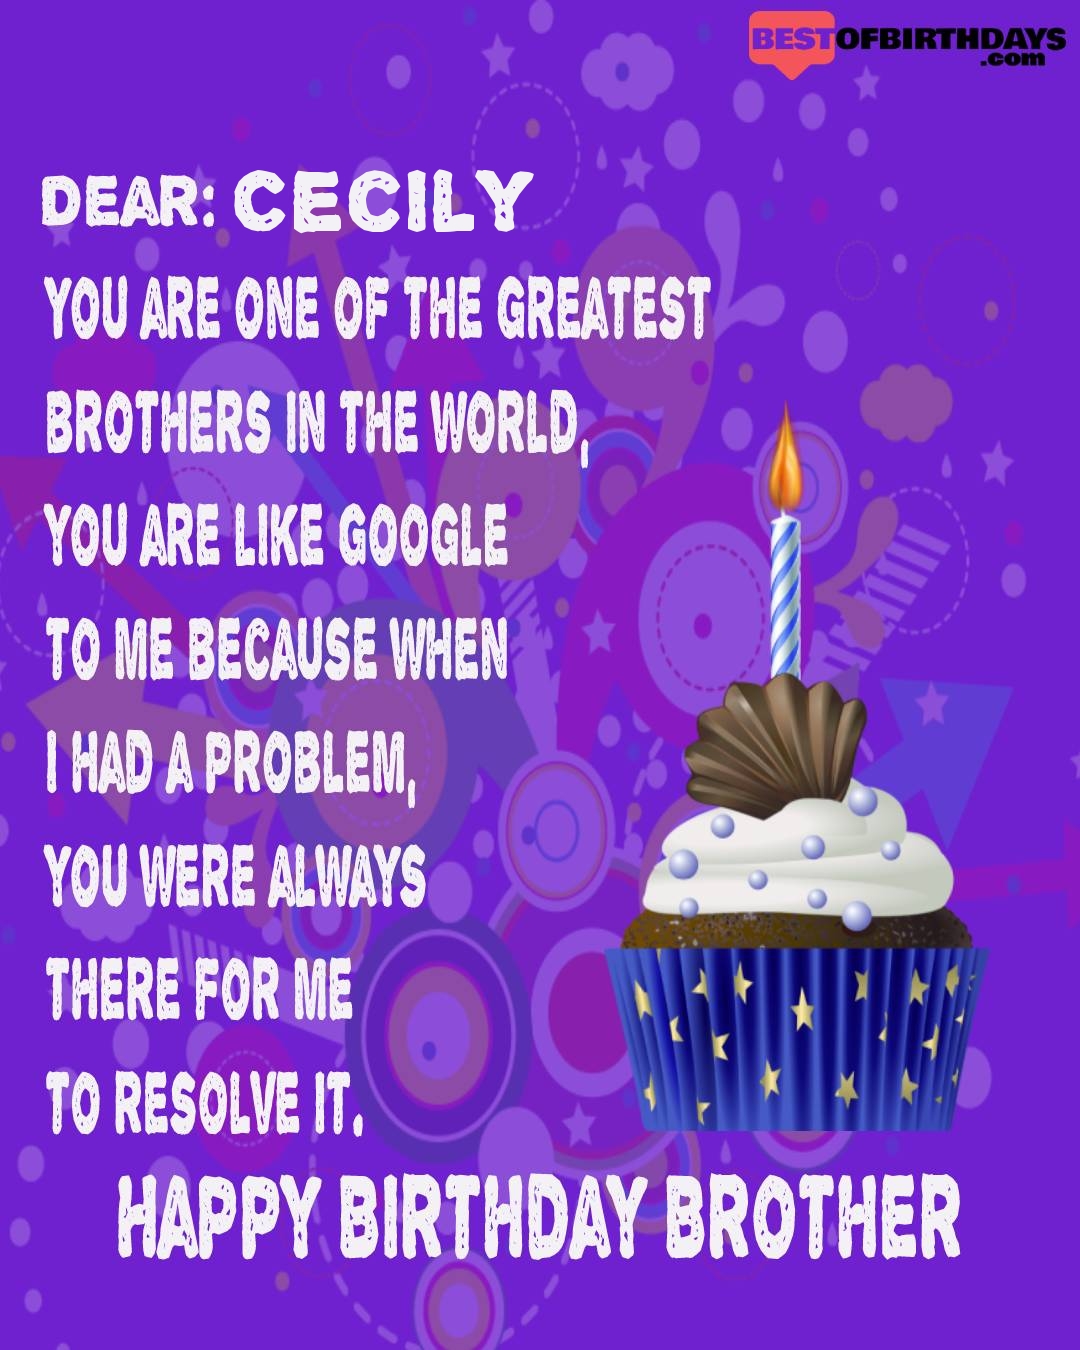 Happy birthday cecily bhai brother bro